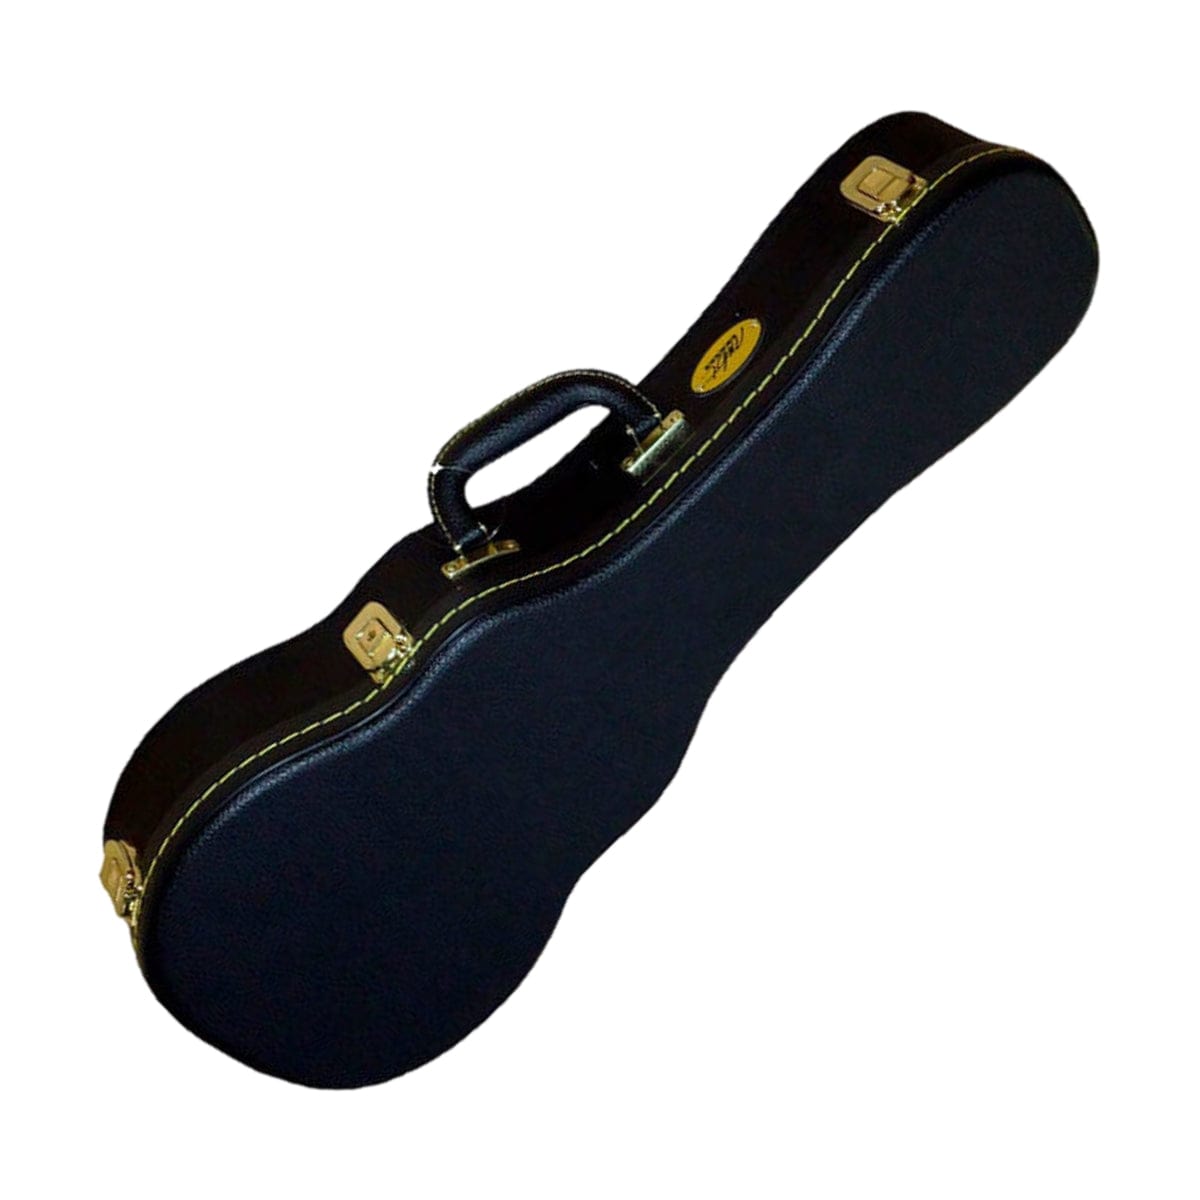 MBT Guitar Accessories MBT Ukulele Case Tenor Size Black - Byron Music